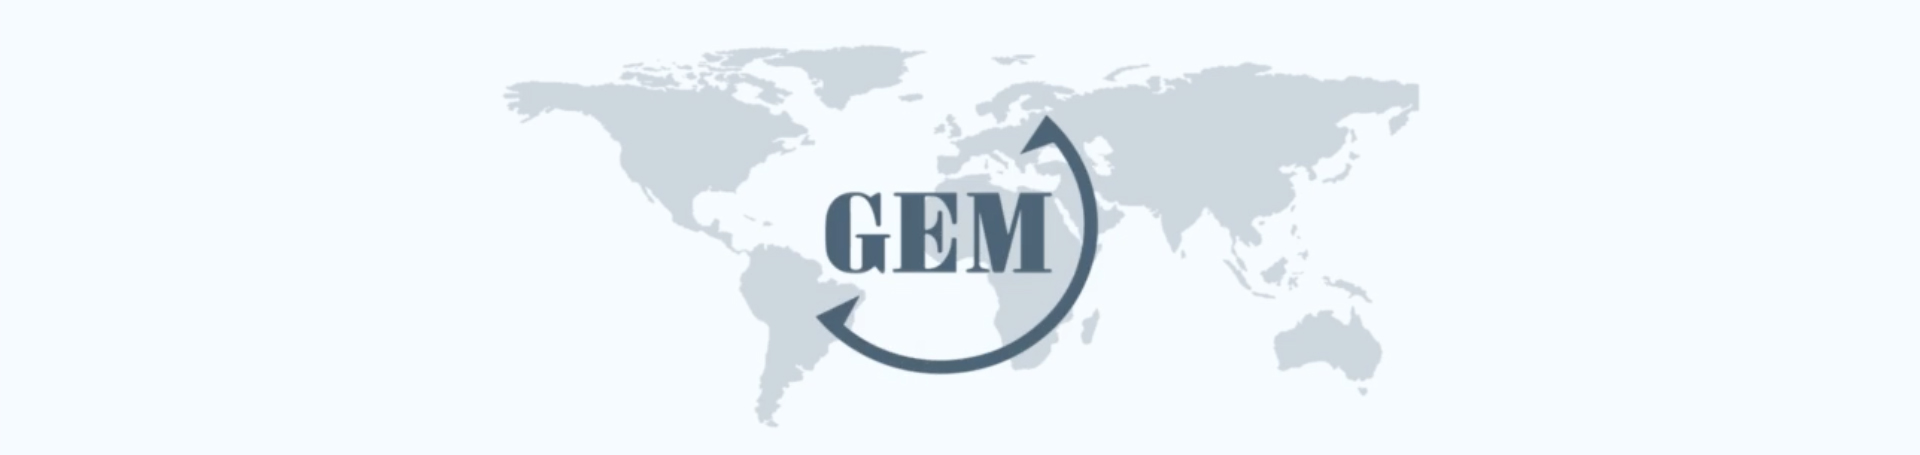 Conheça o Global Enterpreneurship Monitor